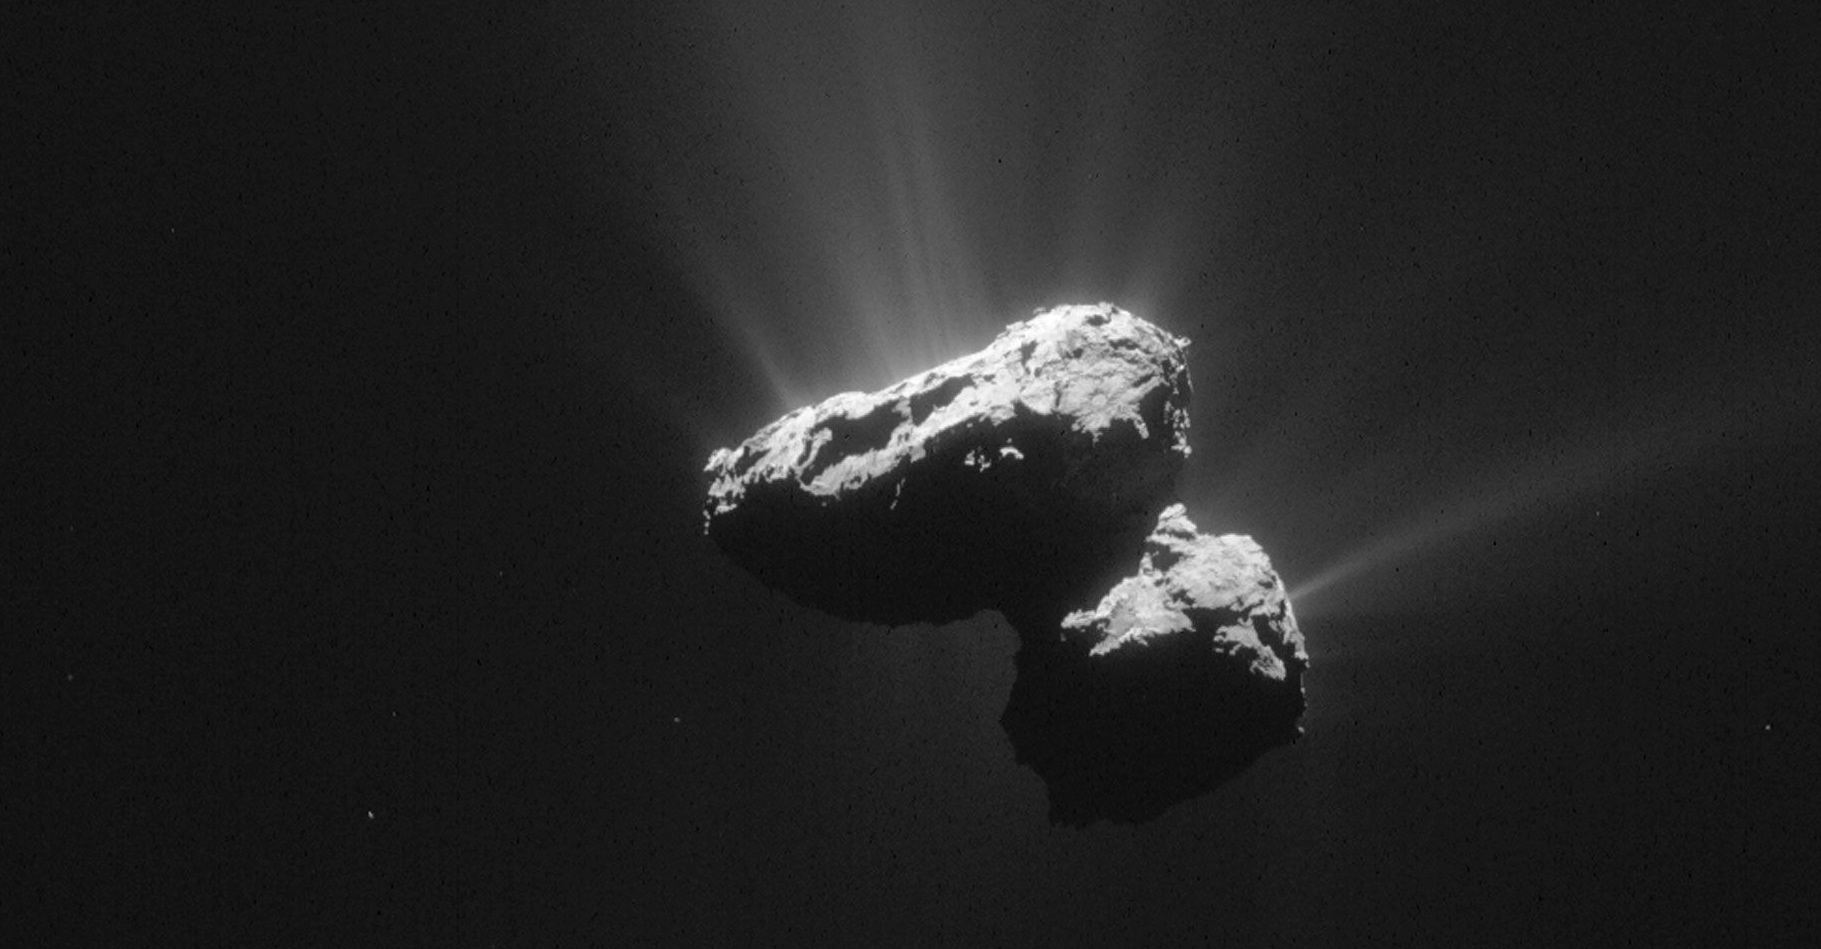 Le noyau bilobé de la comète 67P/Churyumov-Gerasimenko, alias Tchouri, photographié par Rosetta. Sa forme lui a valu d’être surnommée le « canard de bain ». © Esa, Rosetta, NavCam, CC BY-SA IGO 3.0